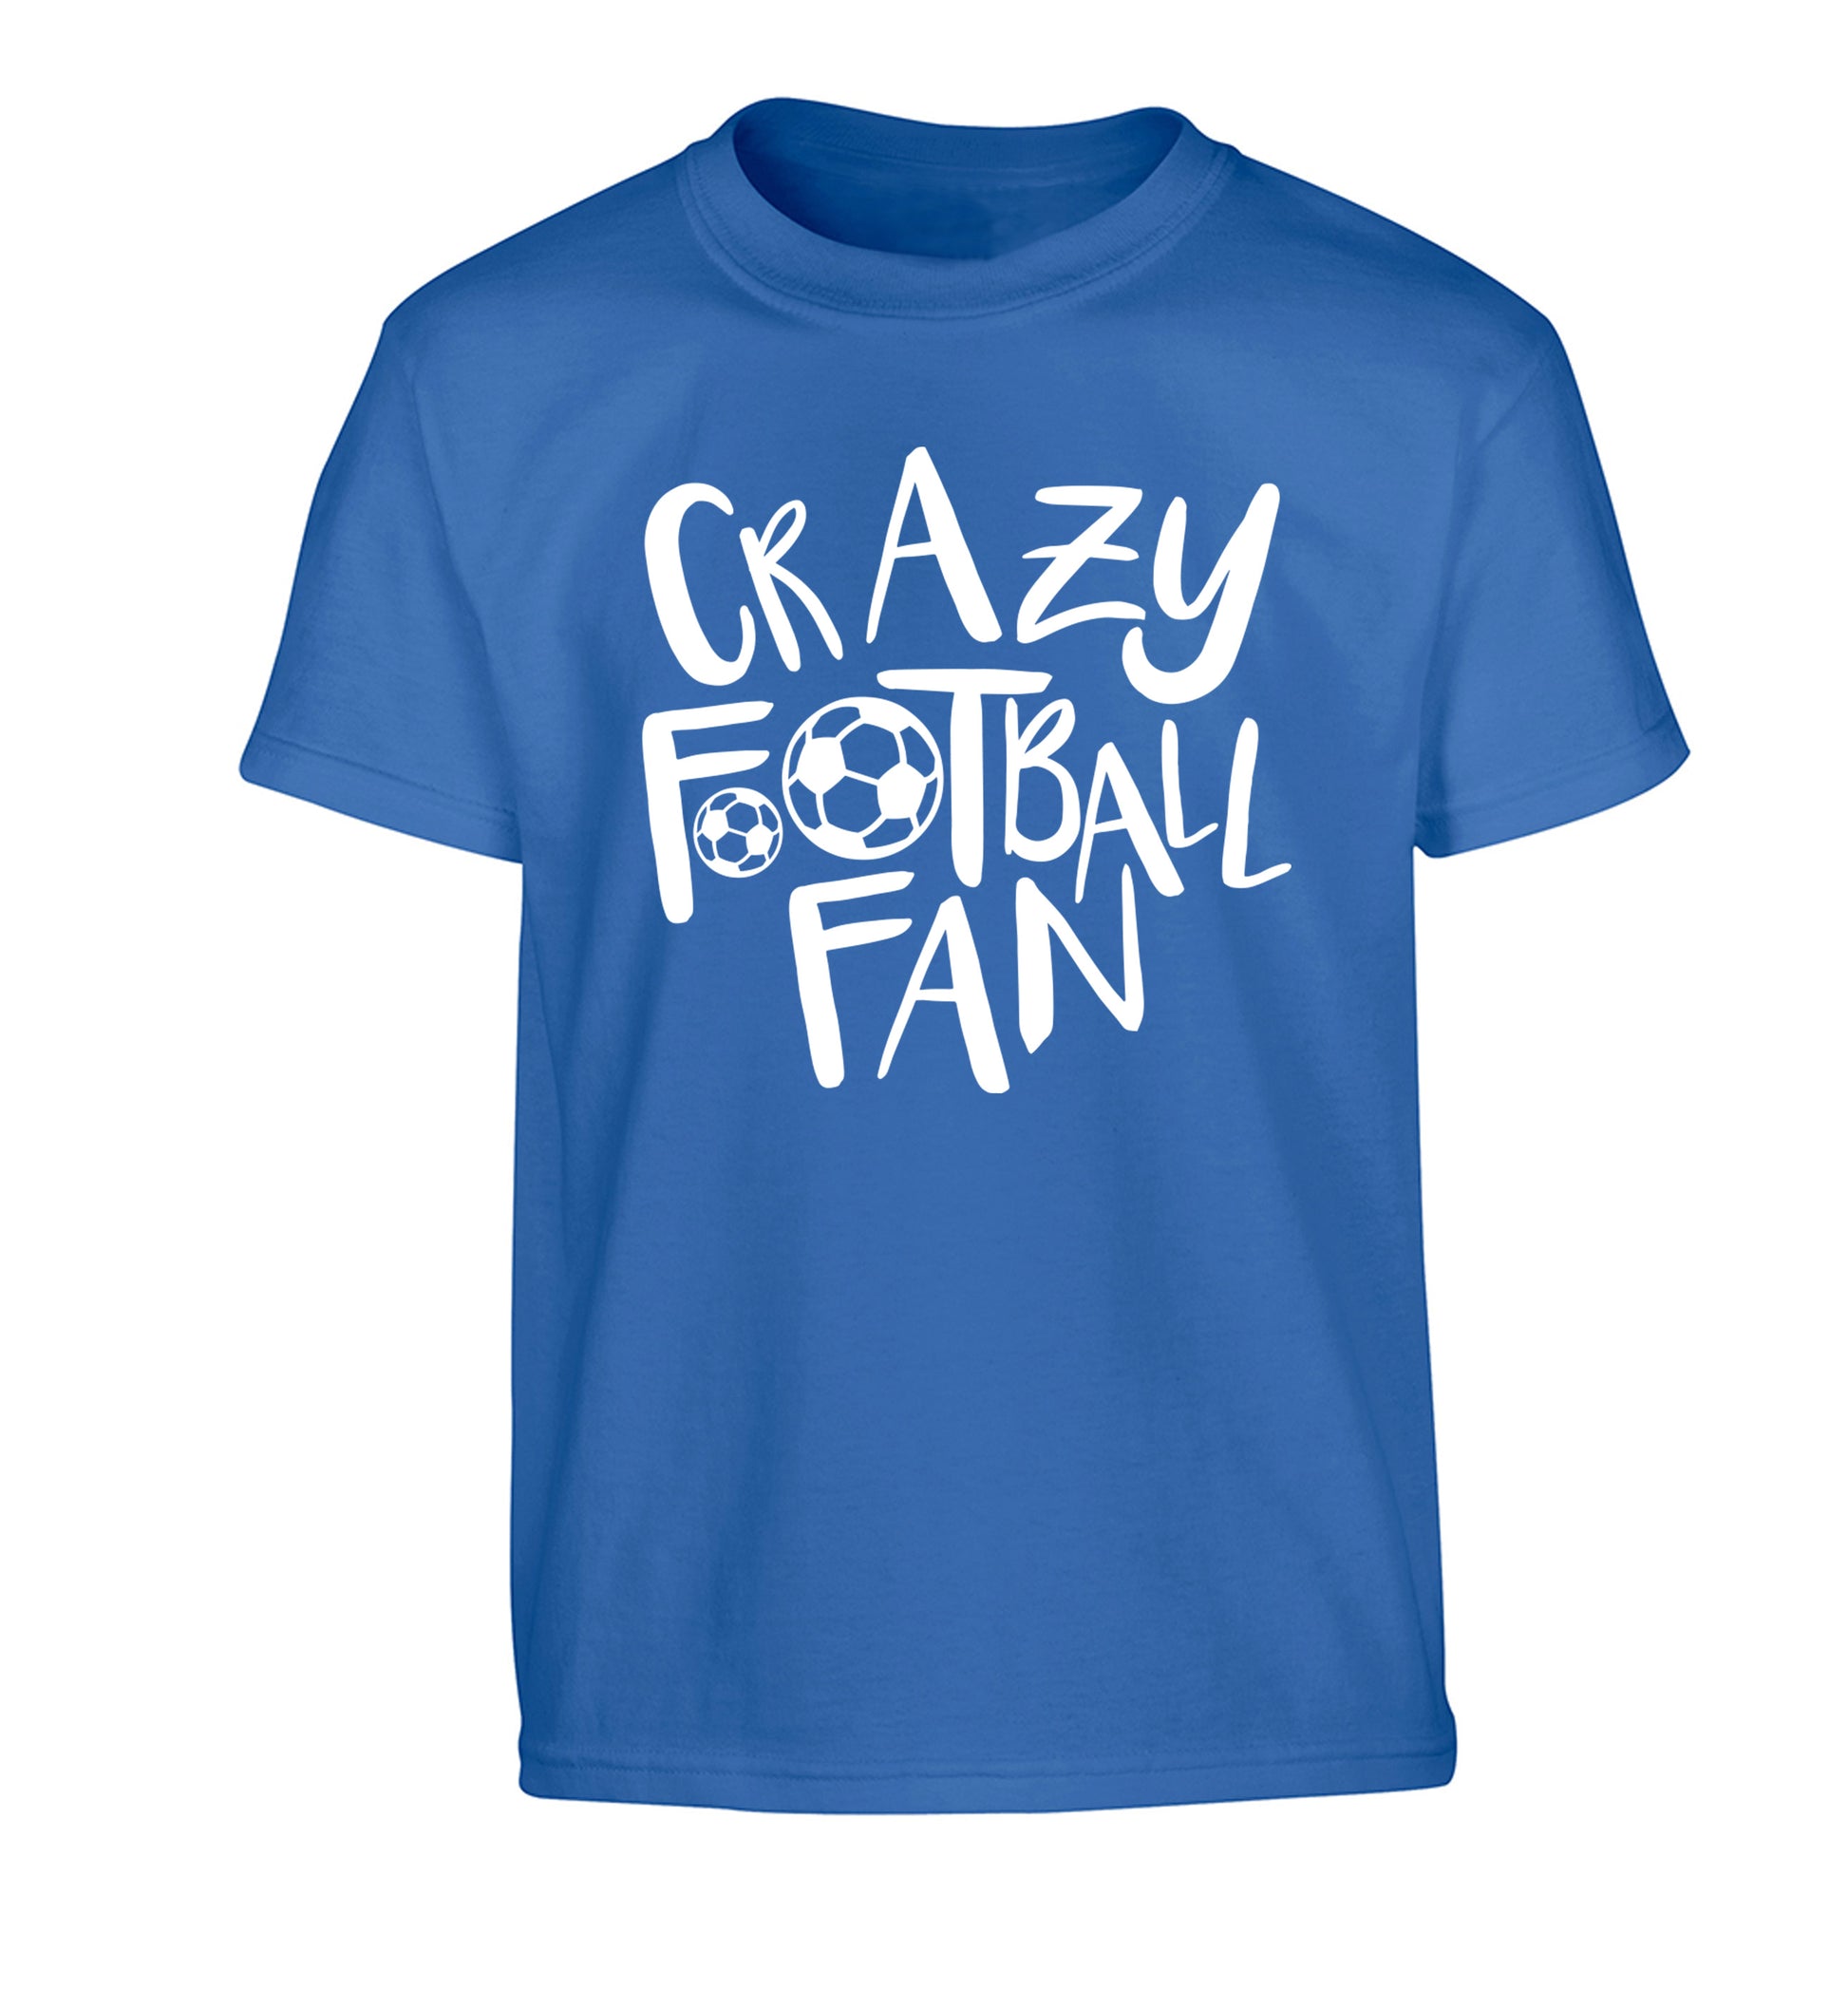 Crazy football fan Children's blue Tshirt 12-14 Years